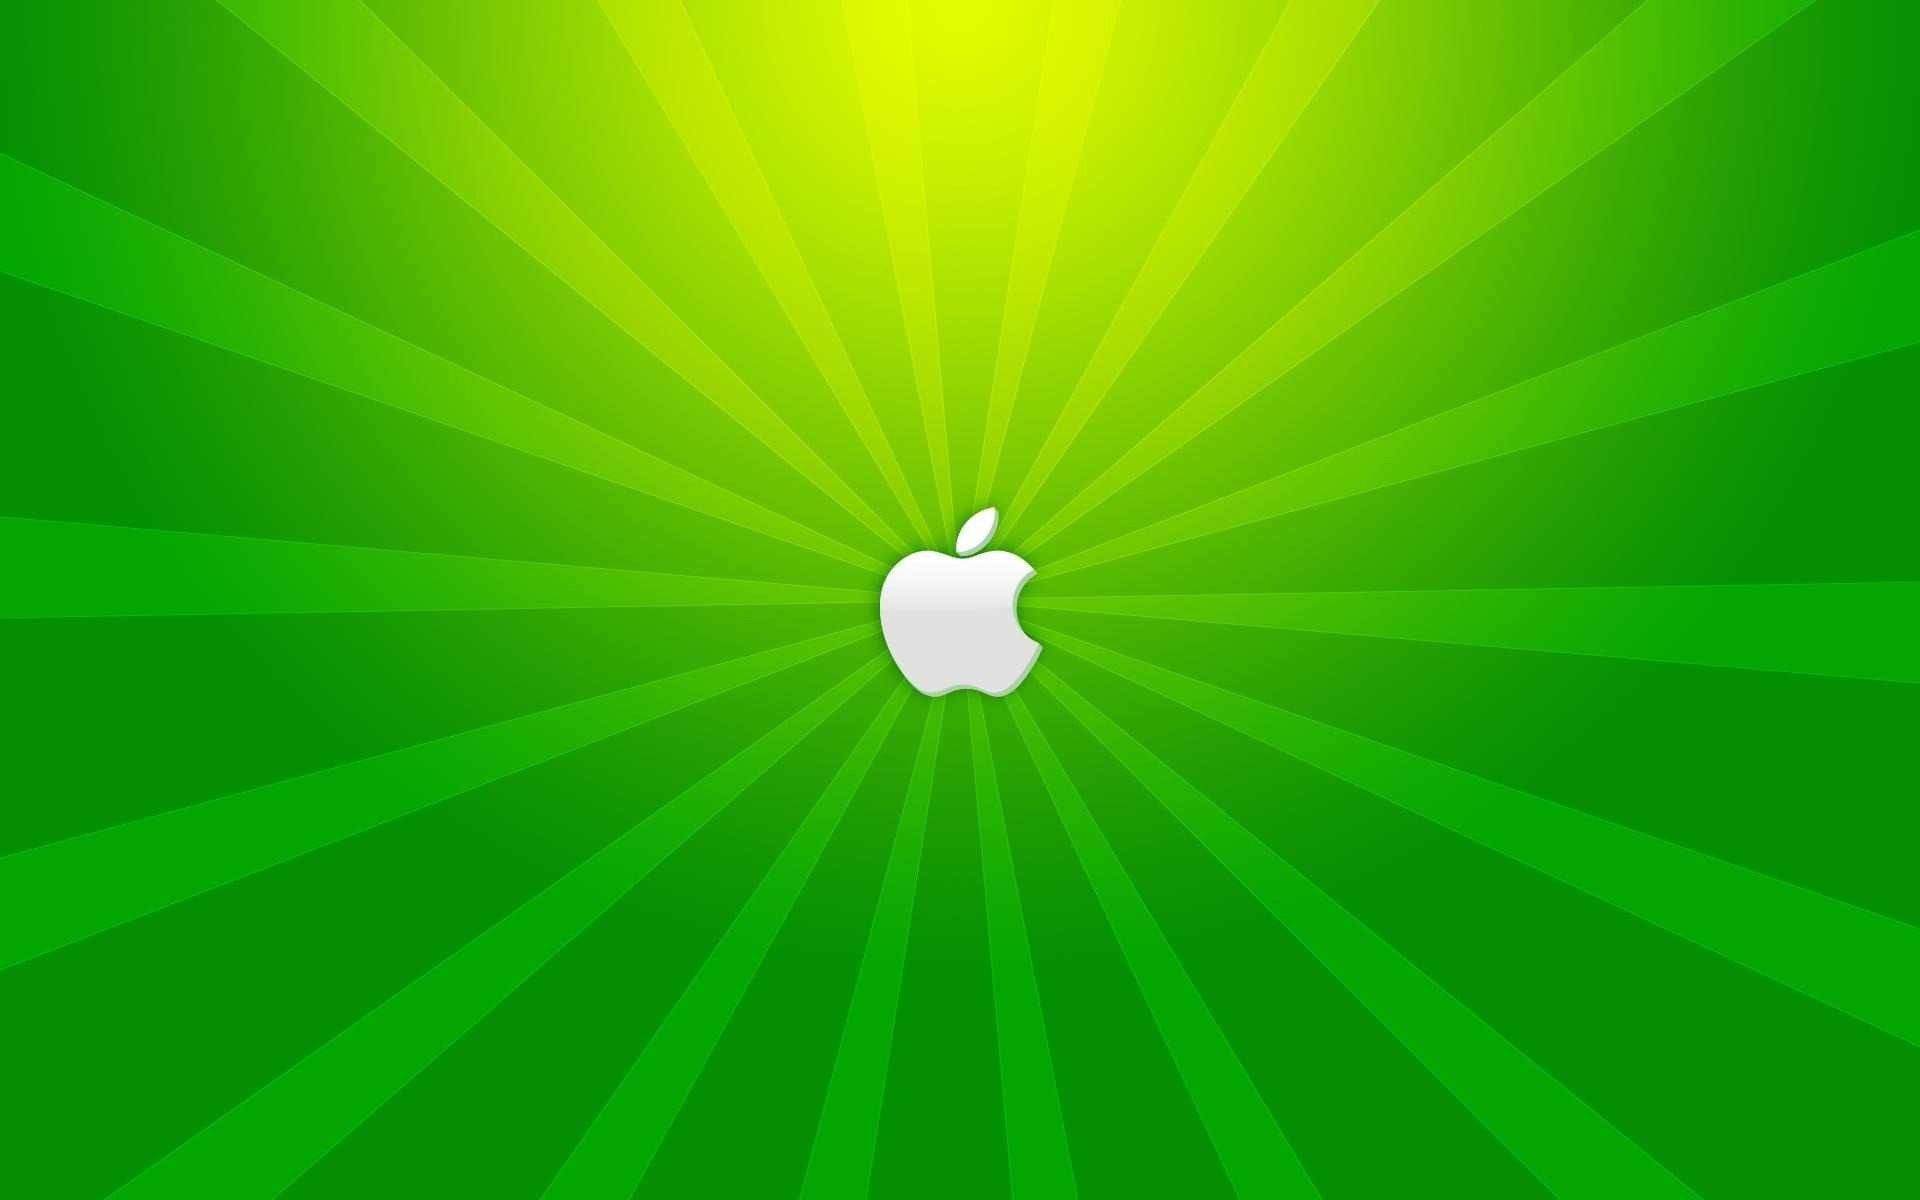 Screen, wallpapers, cool, green, mac (#177702)